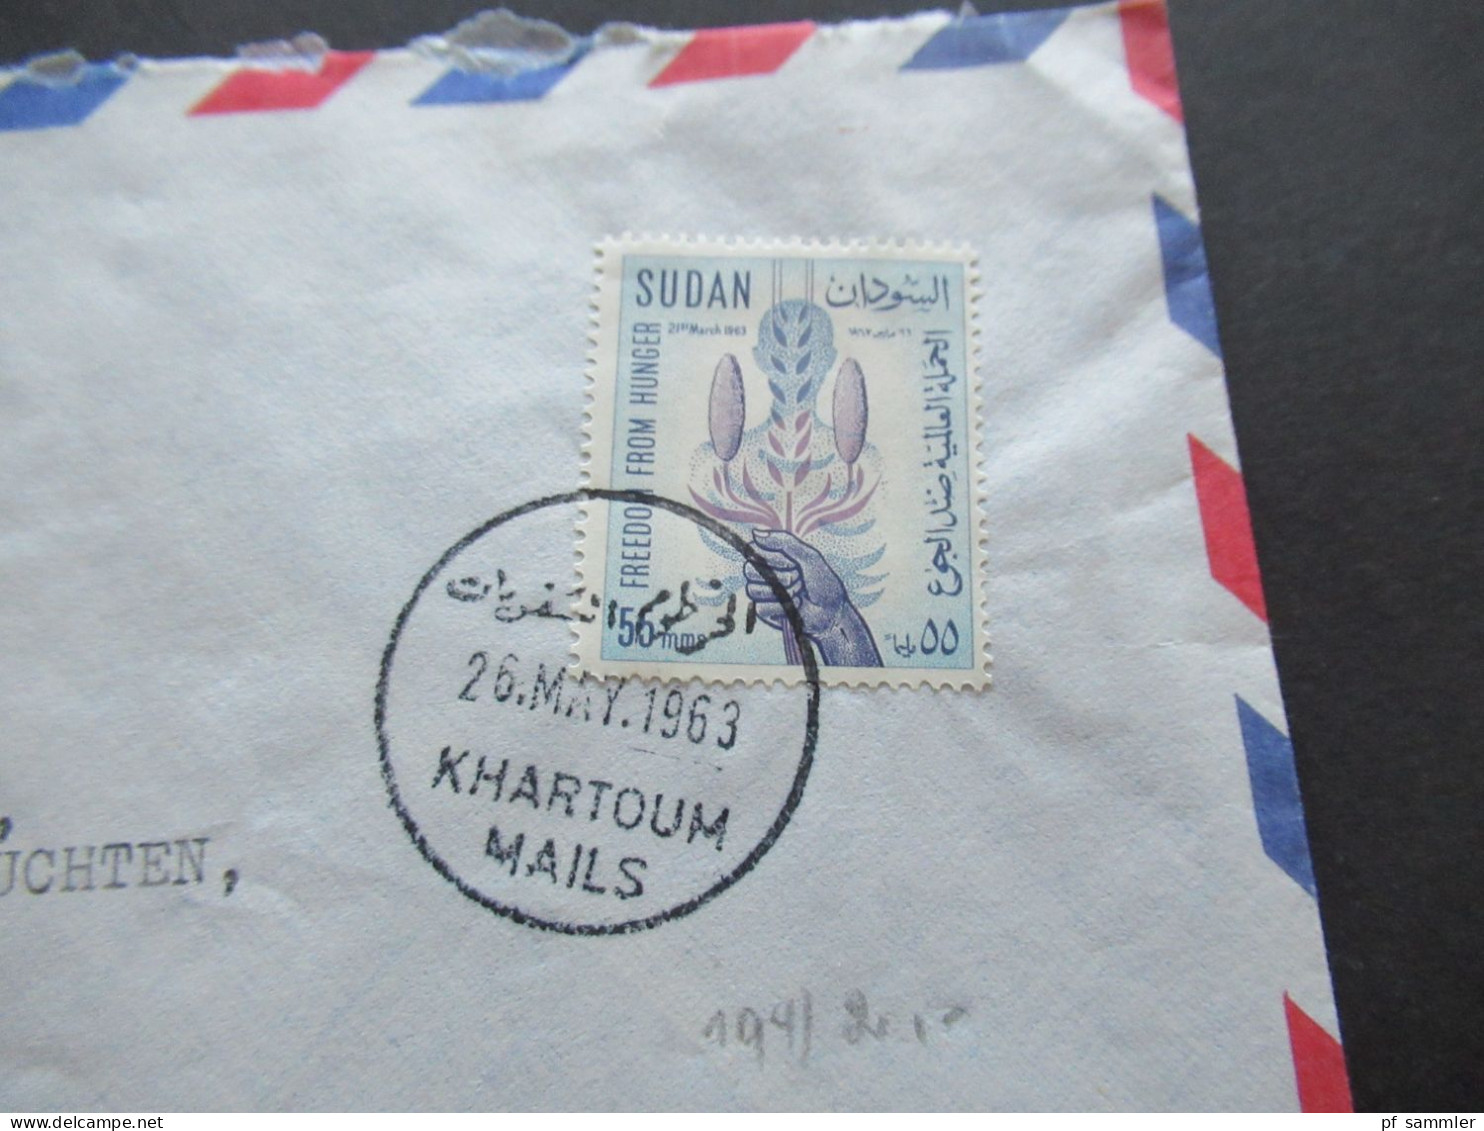 Afrika Sudan 1963 2 Belege Air Mail / Luftpost Firmenumschläge Taha Elsayed El Roubi & Co. Khartoum Sudan Auslandsbriefe